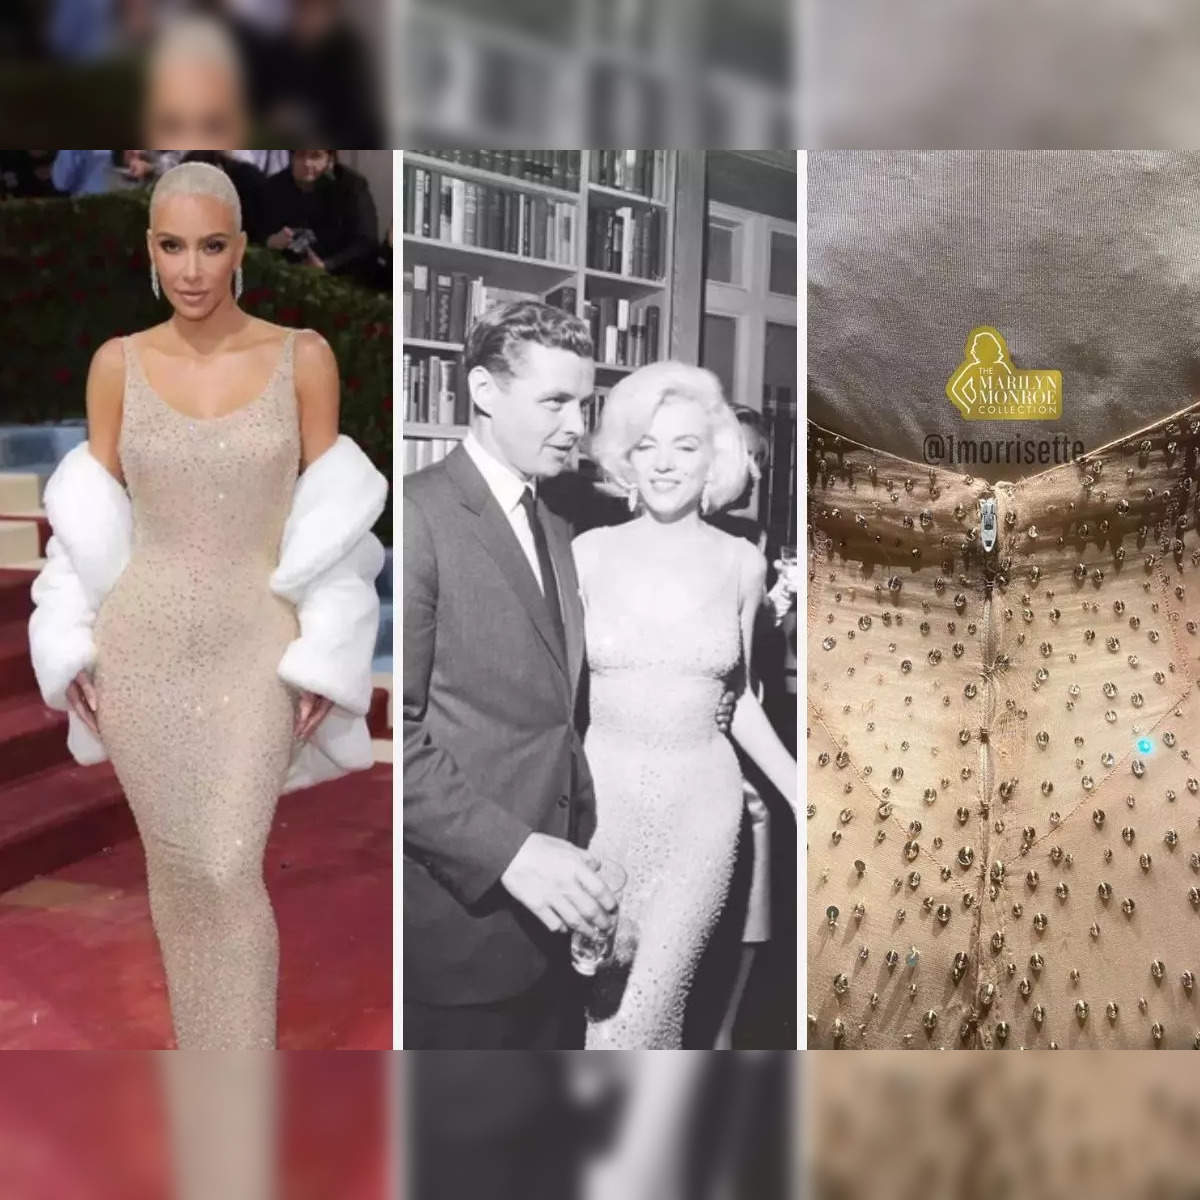 Kim Kardashian wearing Marilyn Monroe's iconic dress